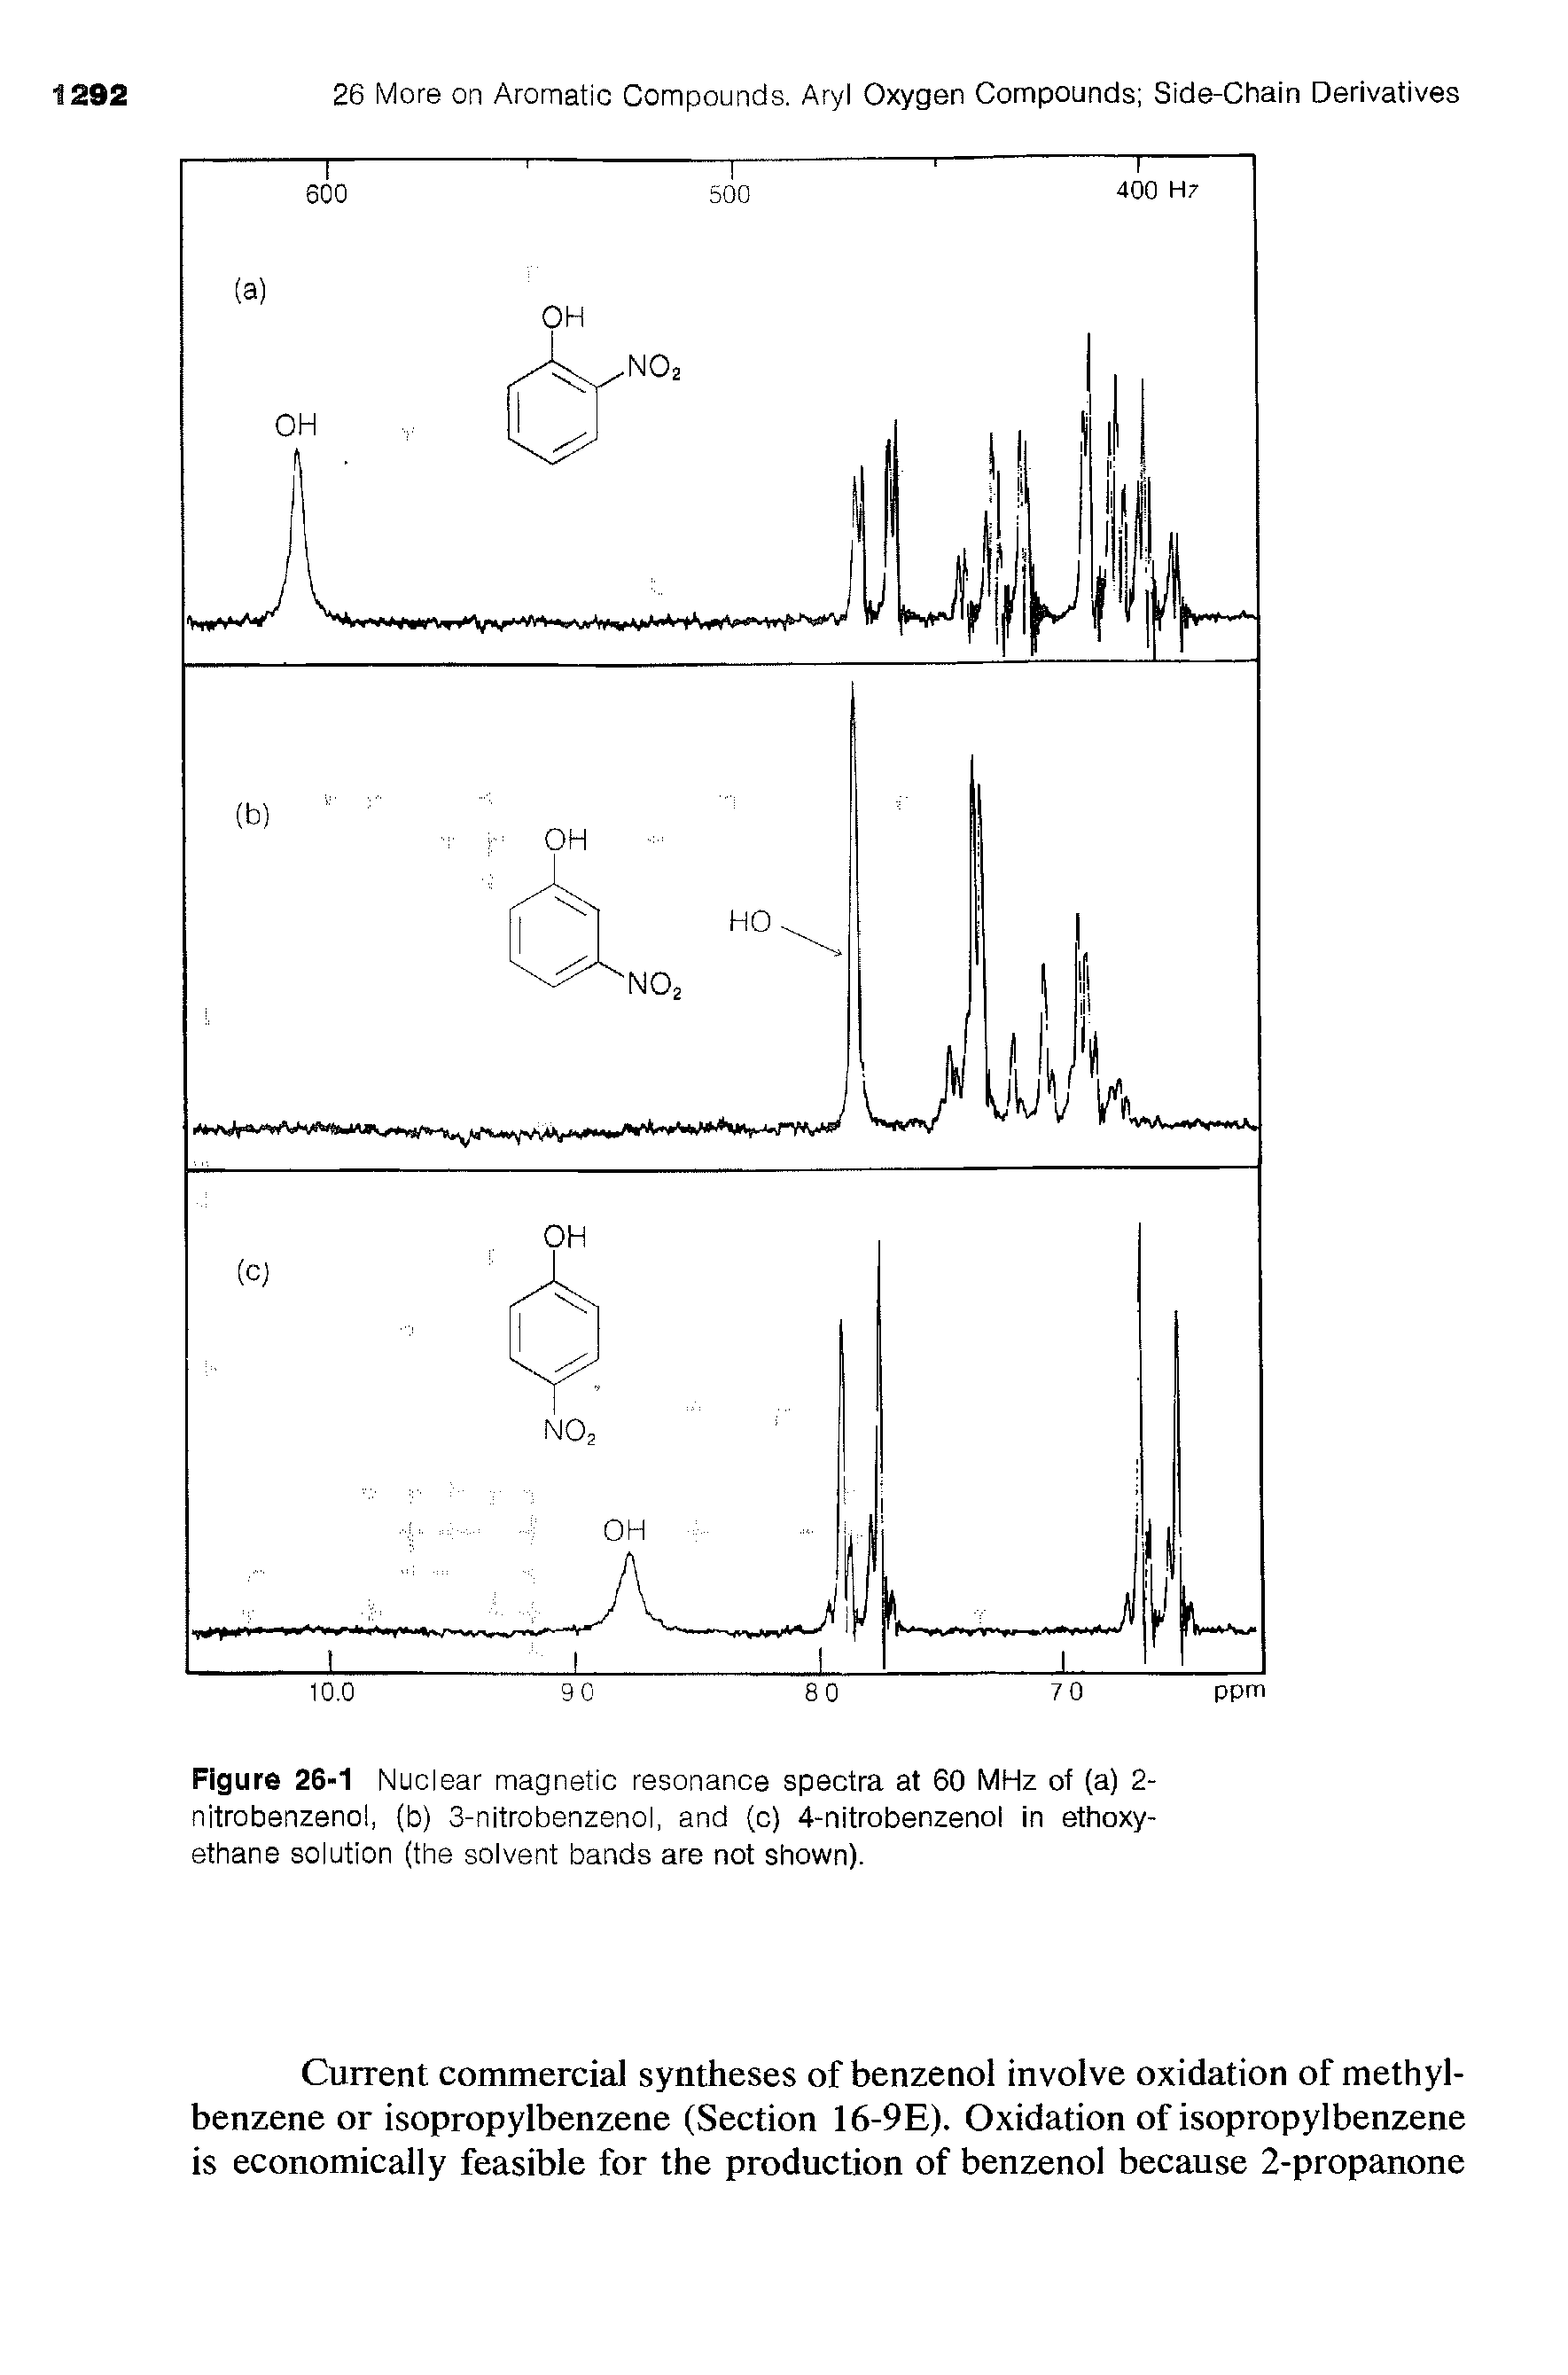 Figure 26-1 Nuclear magnetic resonance spectra at 60 MHz of (a) 2-nitrobenzenol, (b) 3-nitrobenzenol, and (c) 4-nitrobenzenol in ethoxy-ethane solution (the solvent bands are not shown).